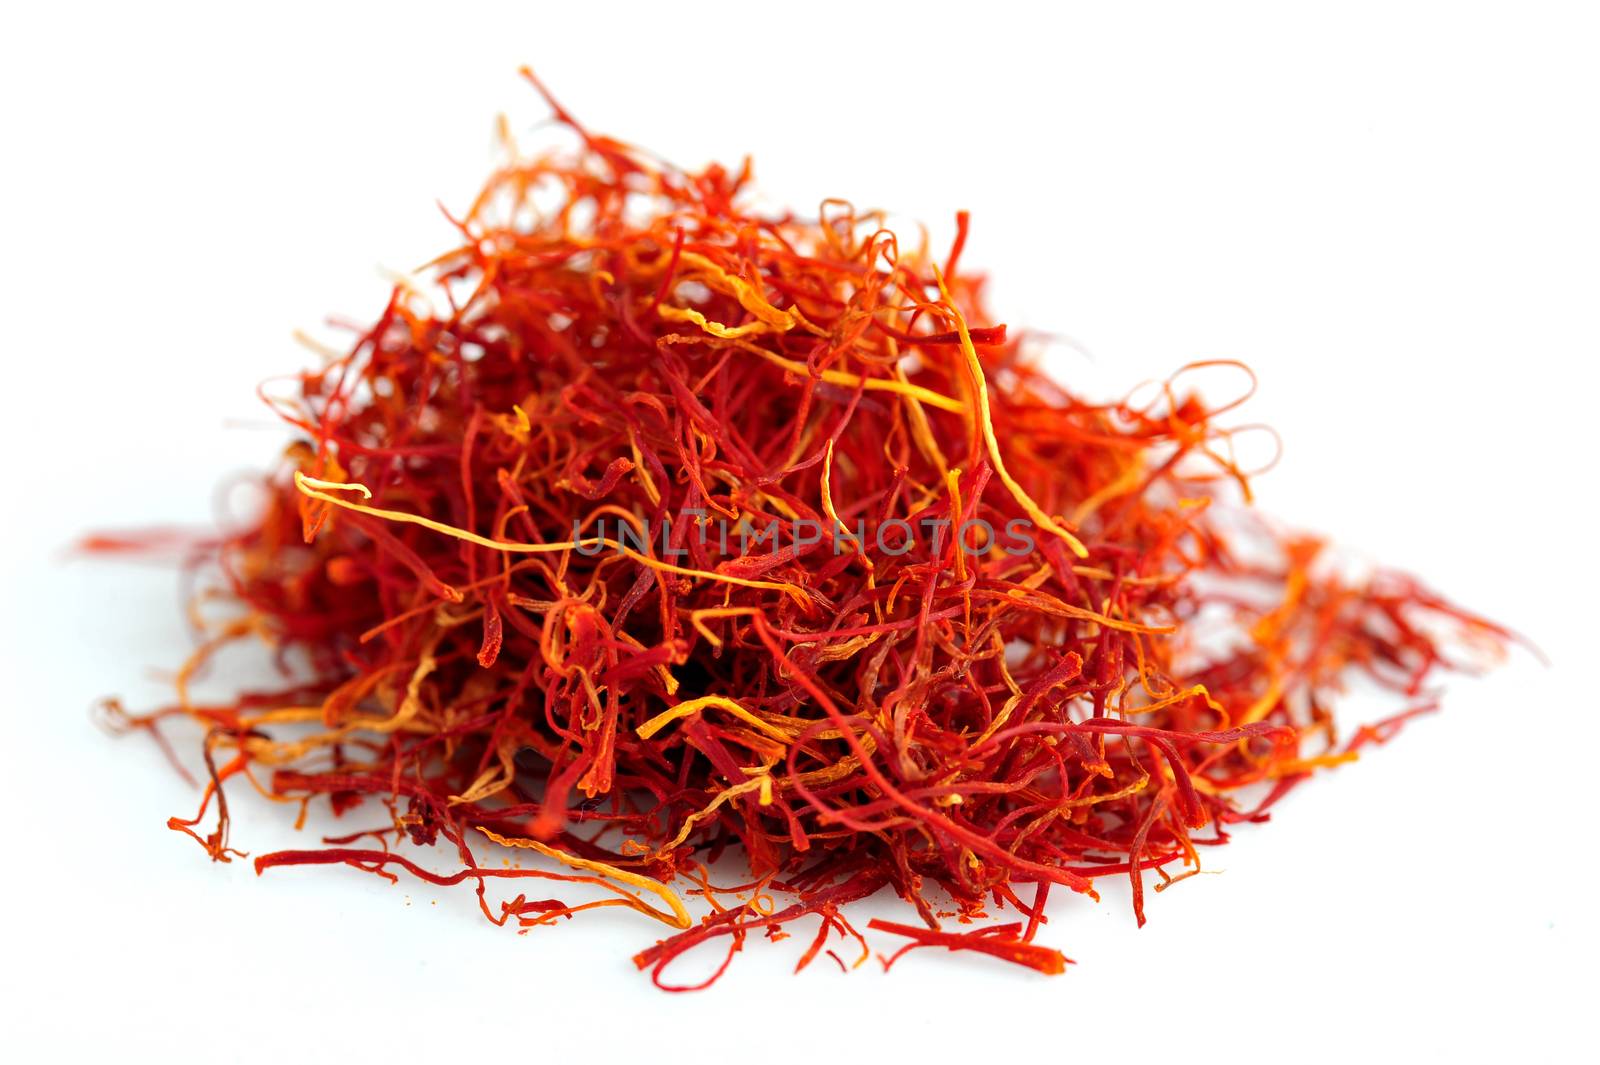 Saffron Spice by seawaters